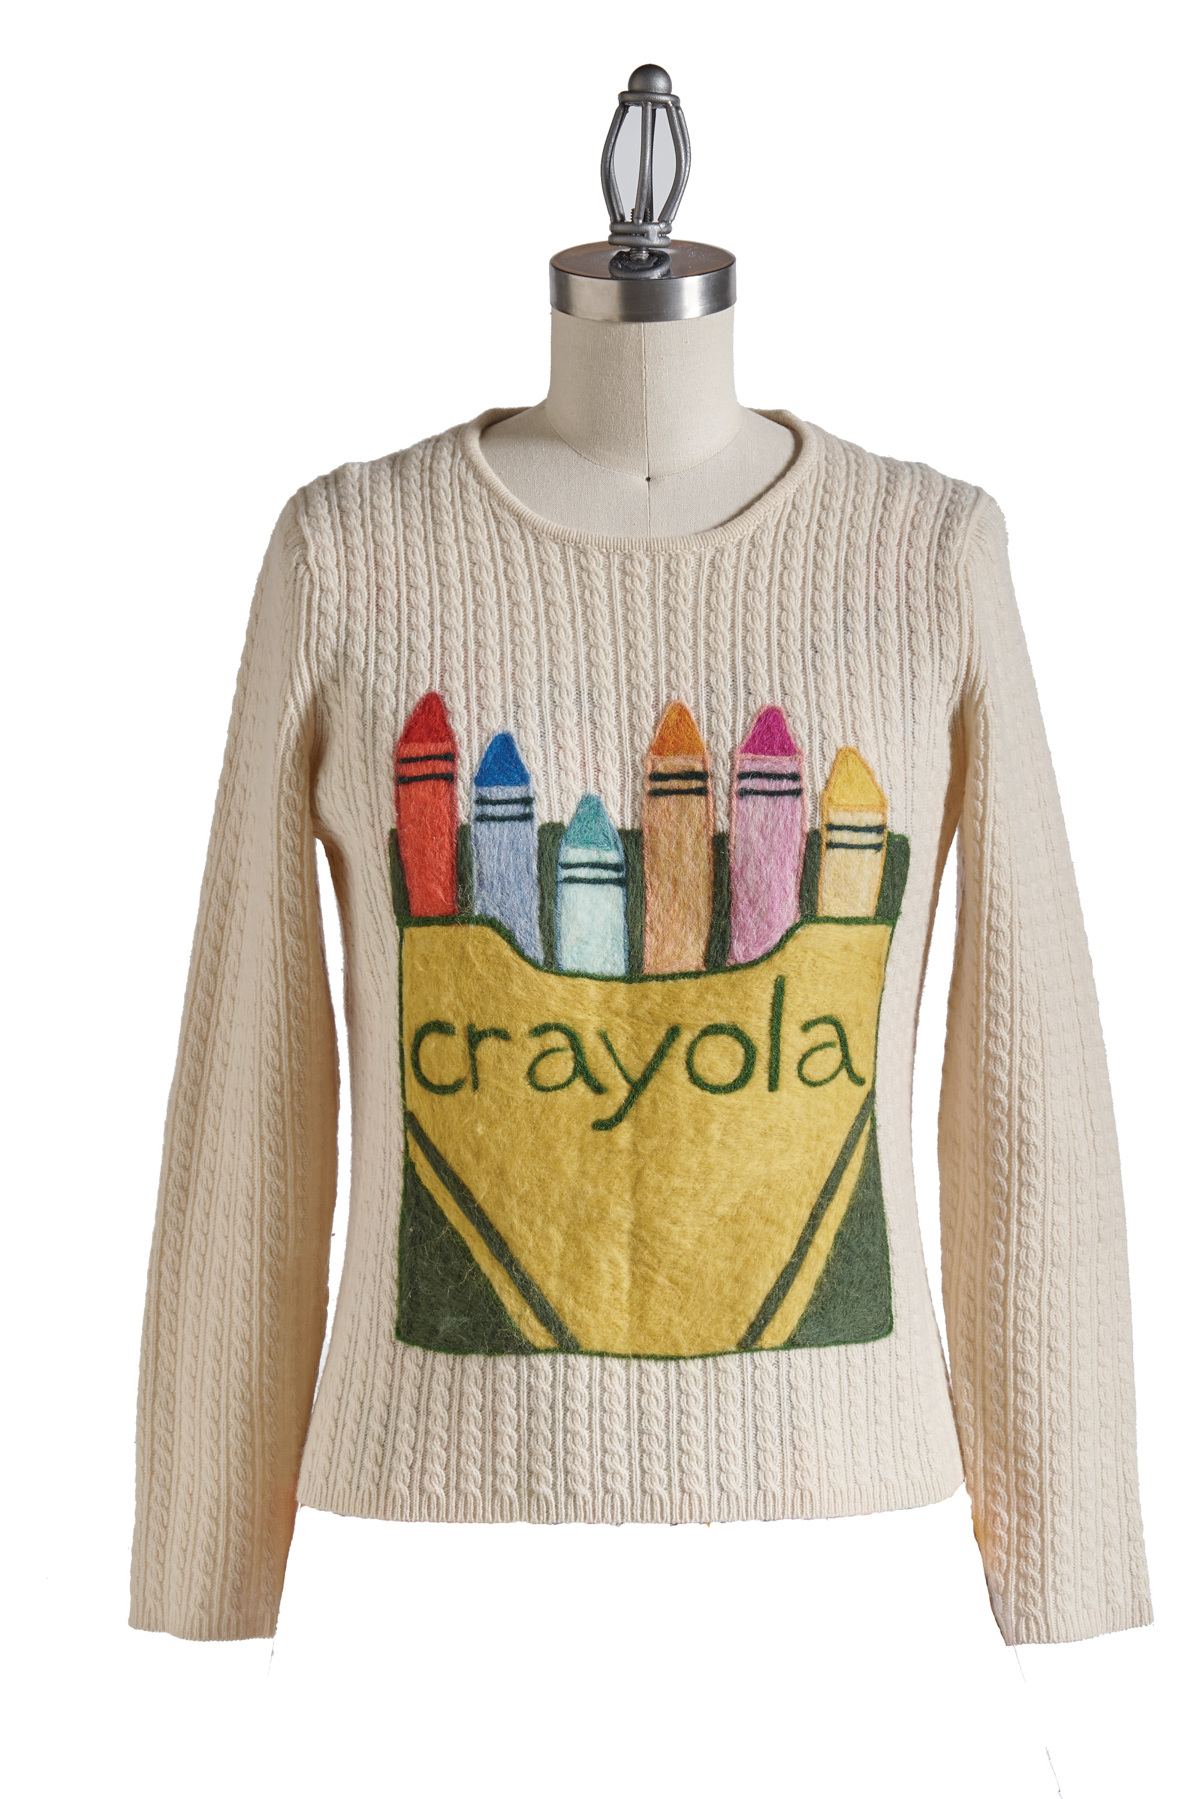 crayola sweater